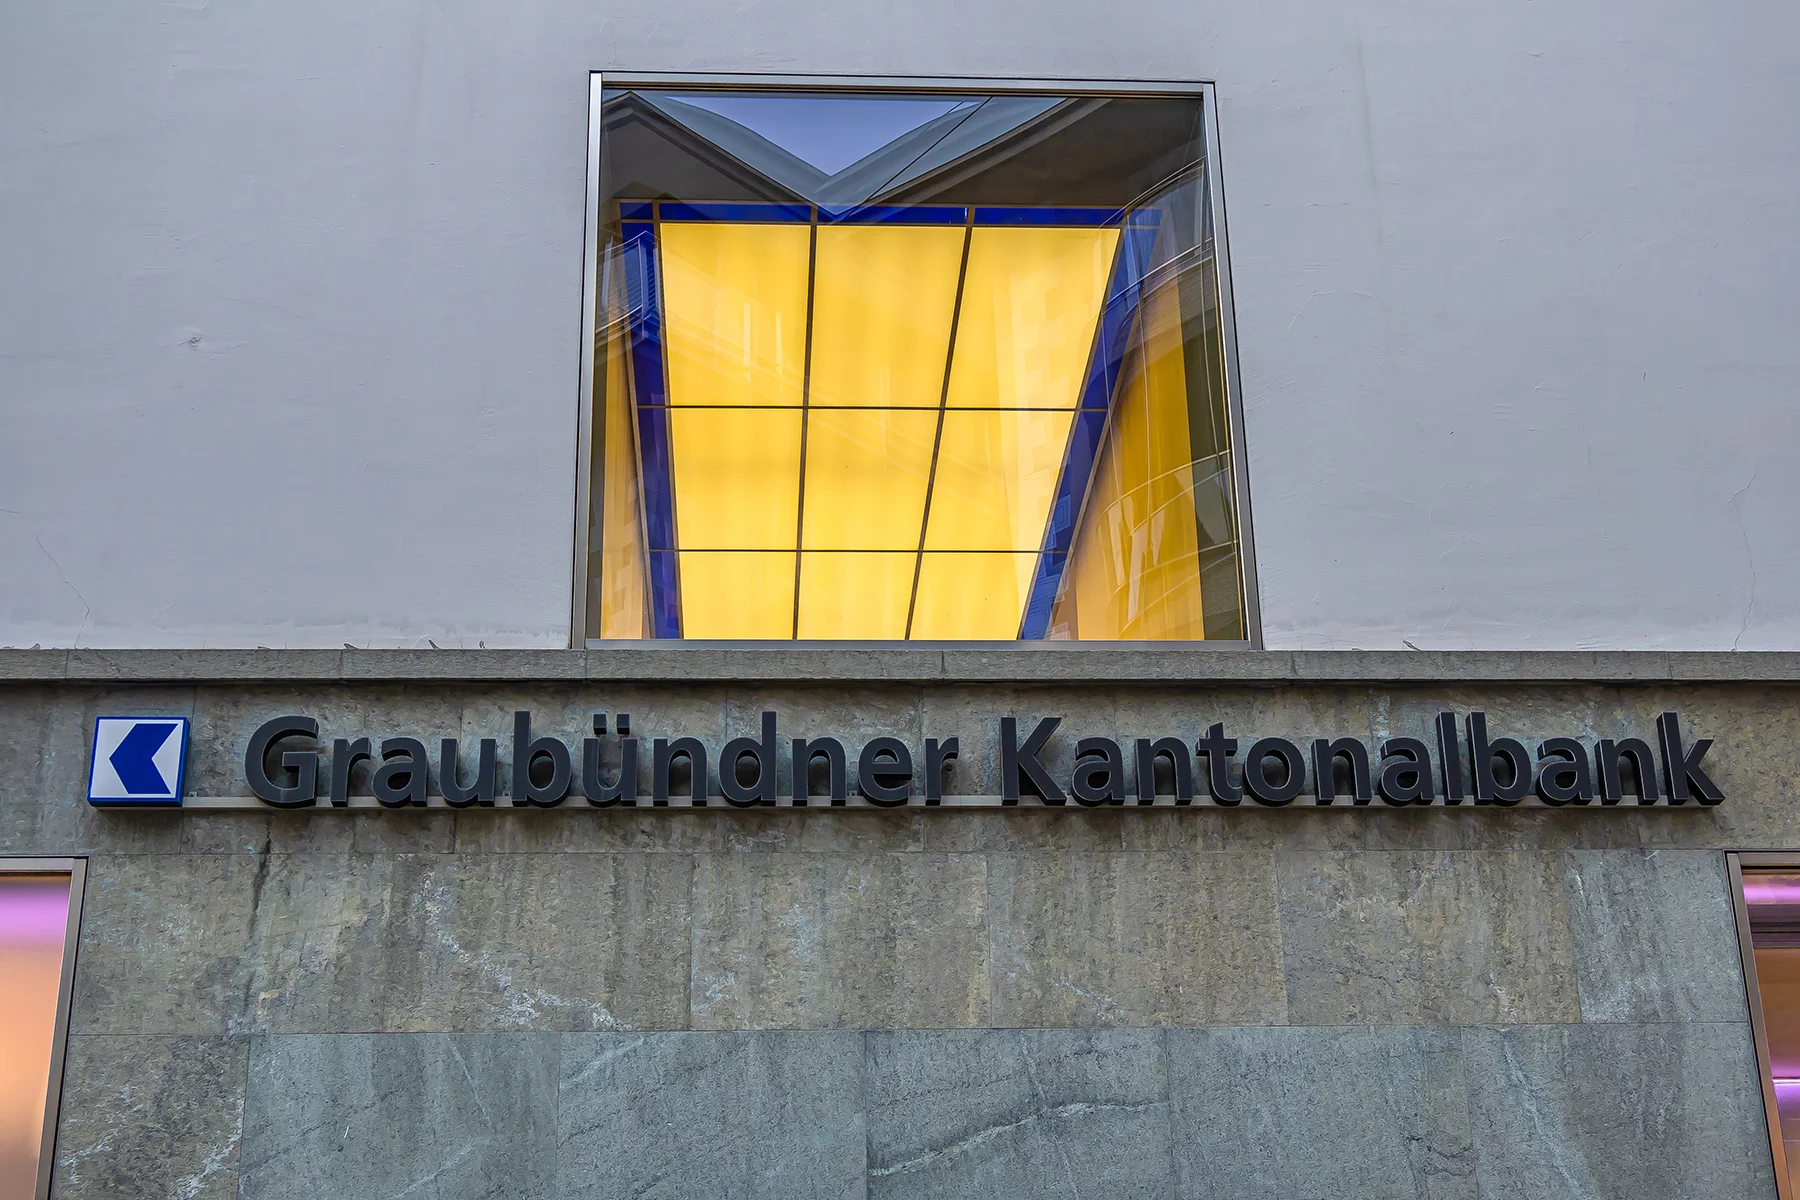 A branch of the Graubündner Kantonalbank in St. Moritz, Switzerland